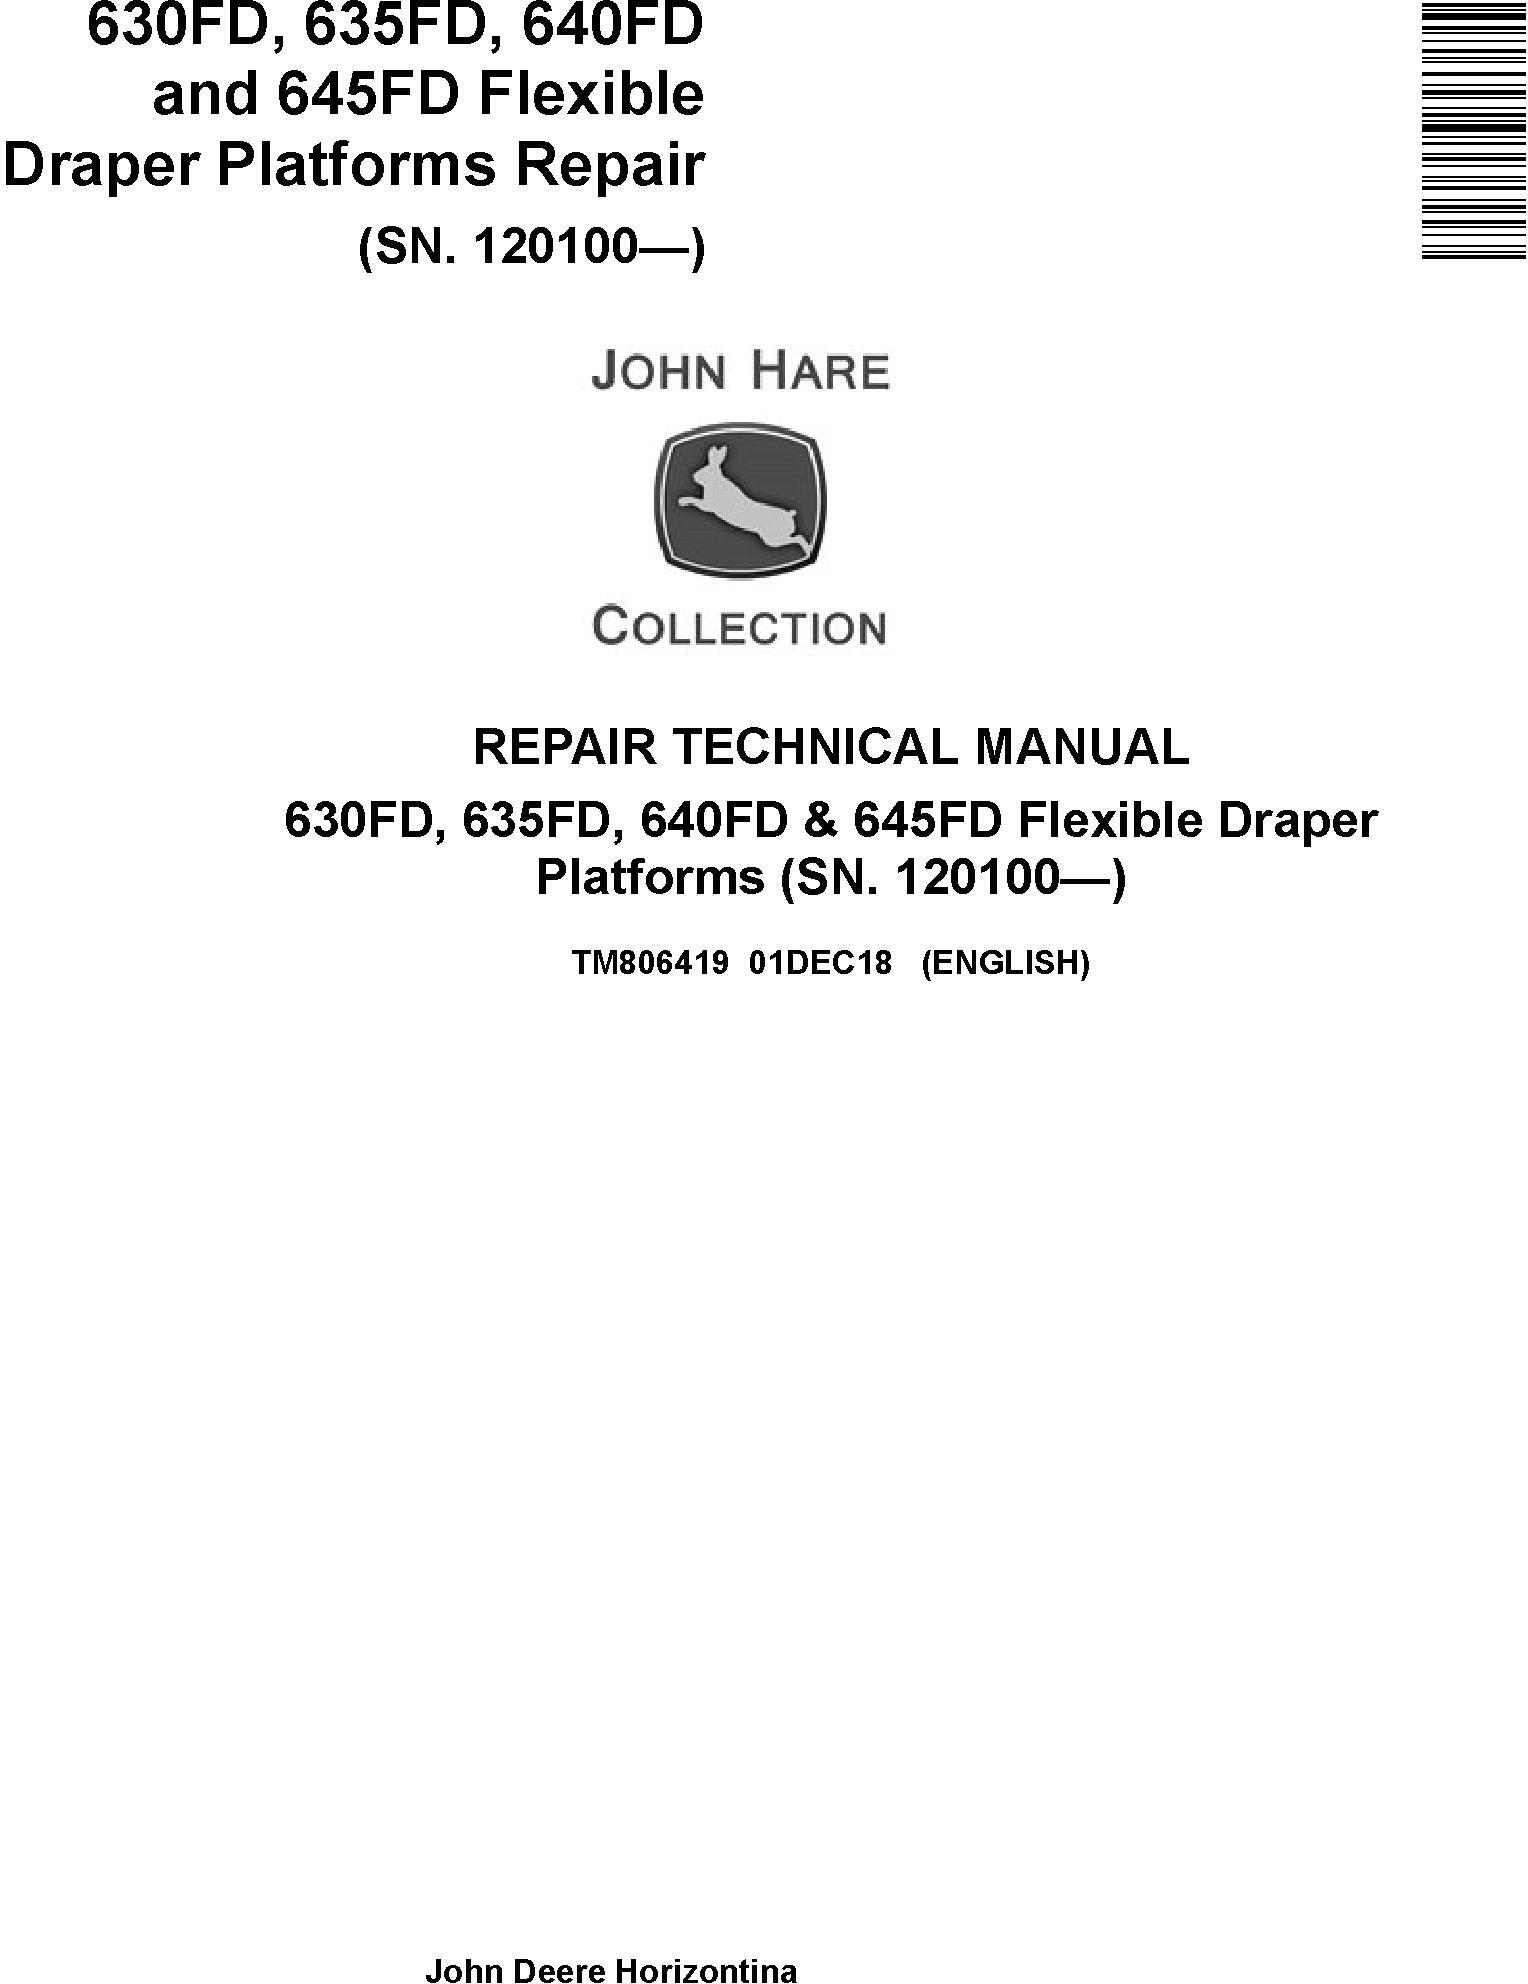 John Deere 630FD, 635FD, 640FD, 645FD Flexible Draper Platform (SN.120100-) Repair Manual (TM806419) - 19239